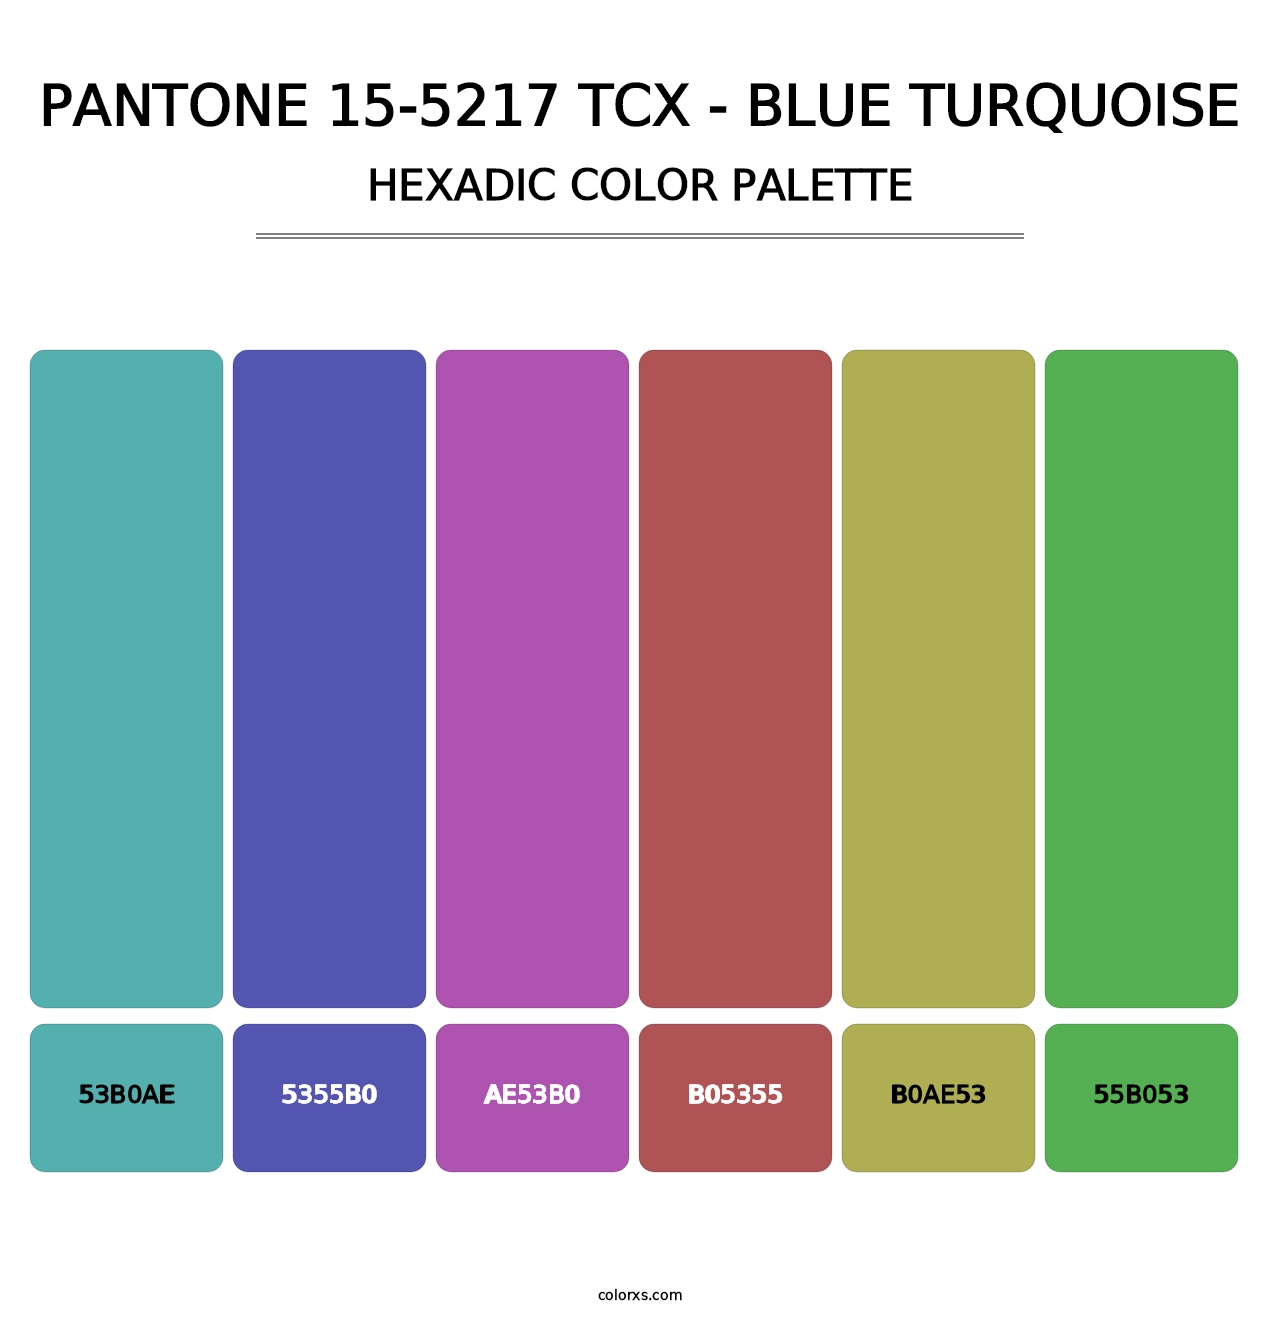 PANTONE 15-5217 TCX - Blue Turquoise - Hexadic Color Palette